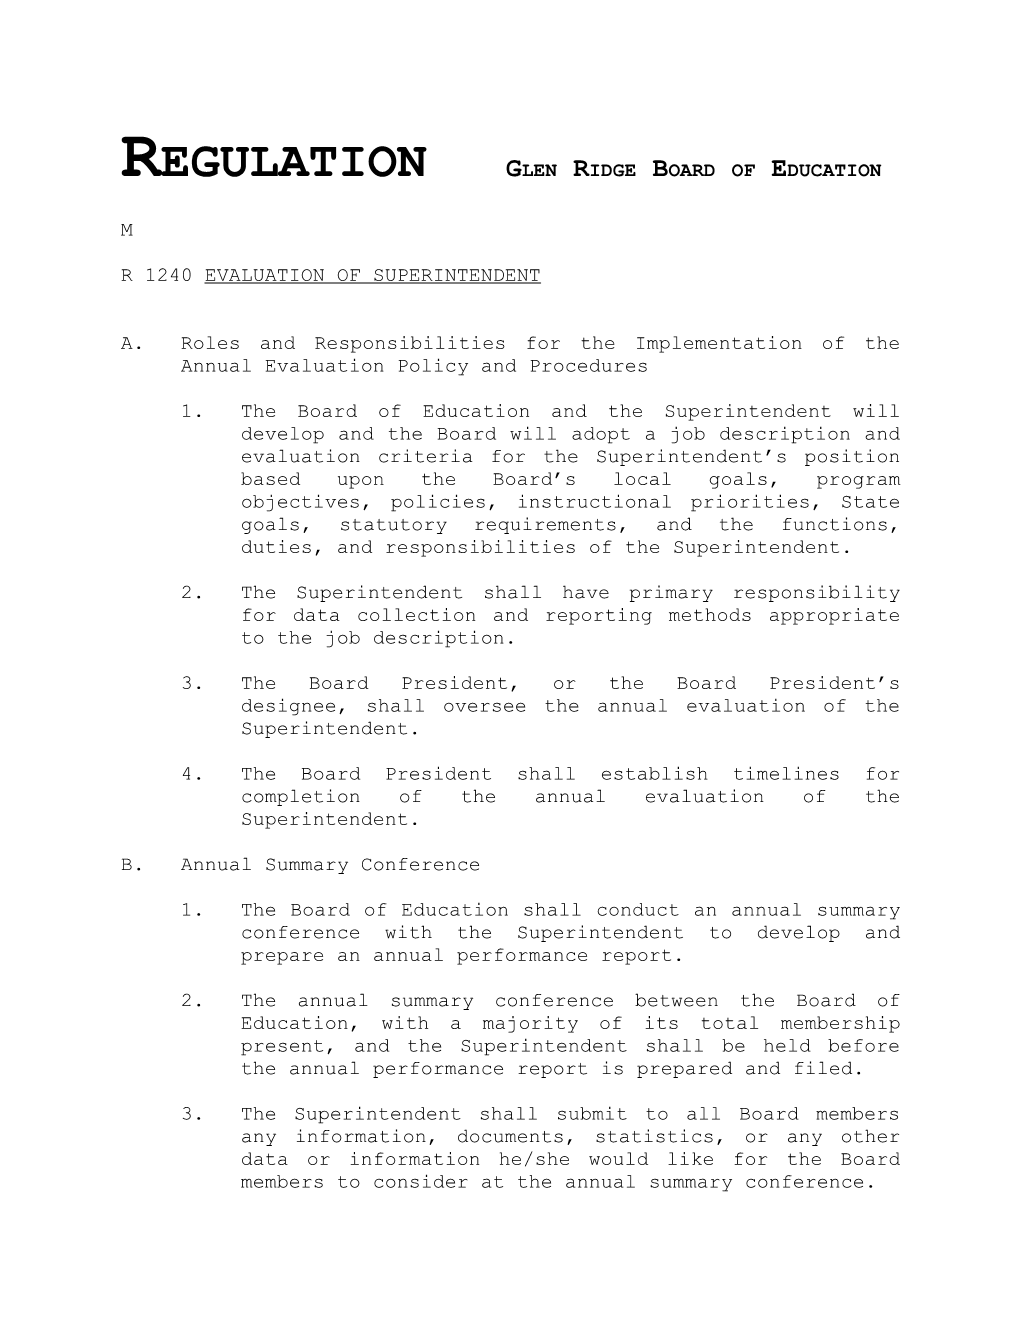 Regulation R1240 - Evaluation of Superintendent